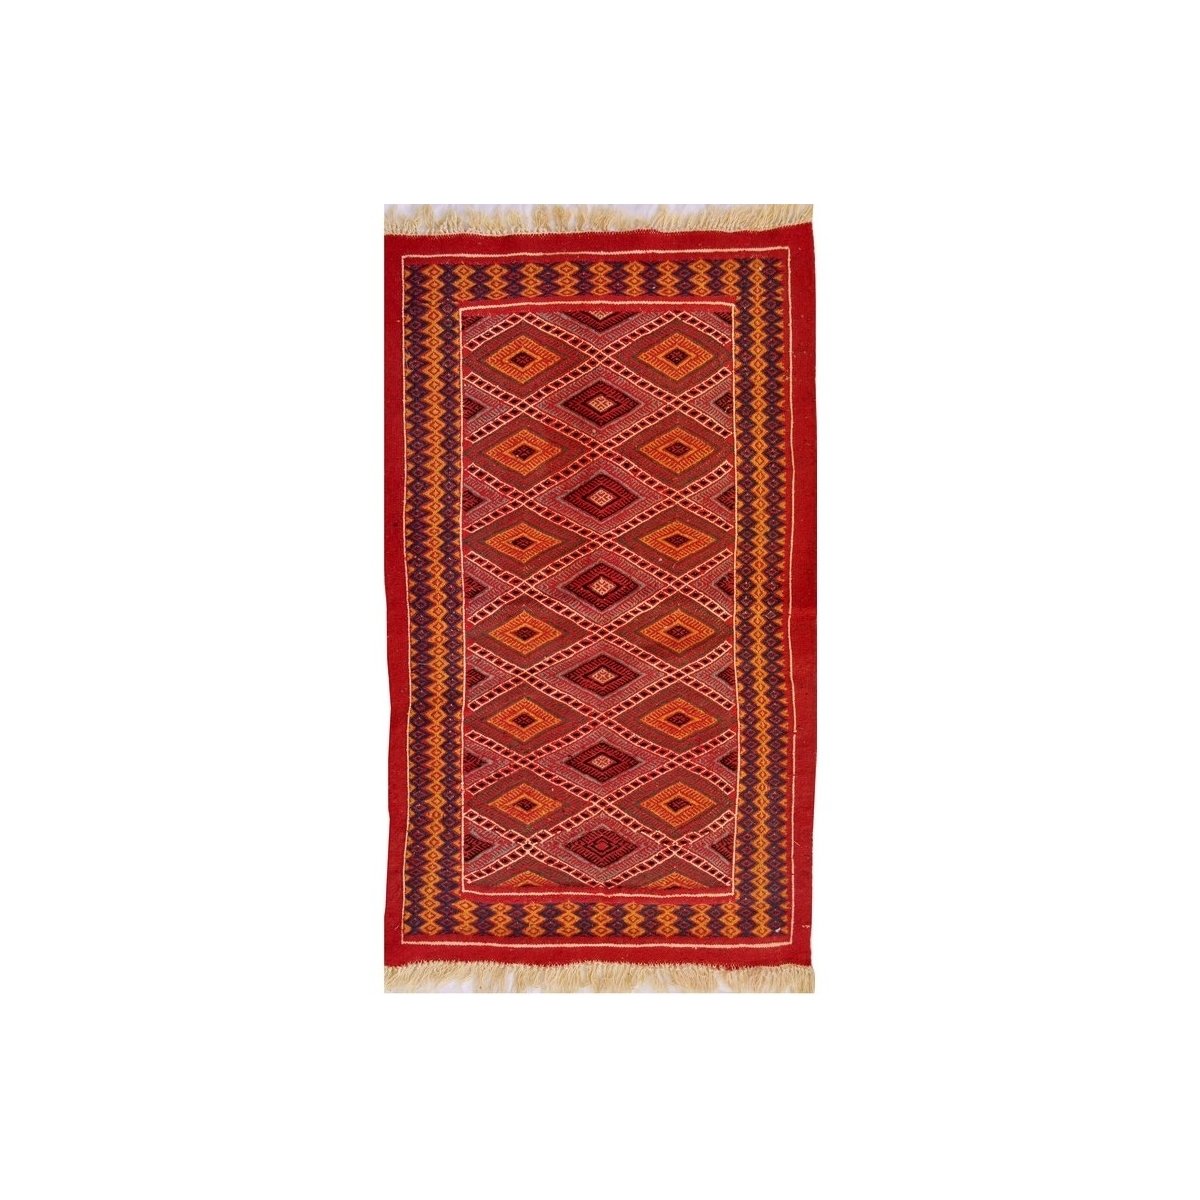 Berber tapijt Tapijt Kilim Jawhar 100x200 Rood/Veelkleurig (Handgeweven, Wol, Tunesië) Tunesisch kilimdeken, Marokkaanse stijl. 